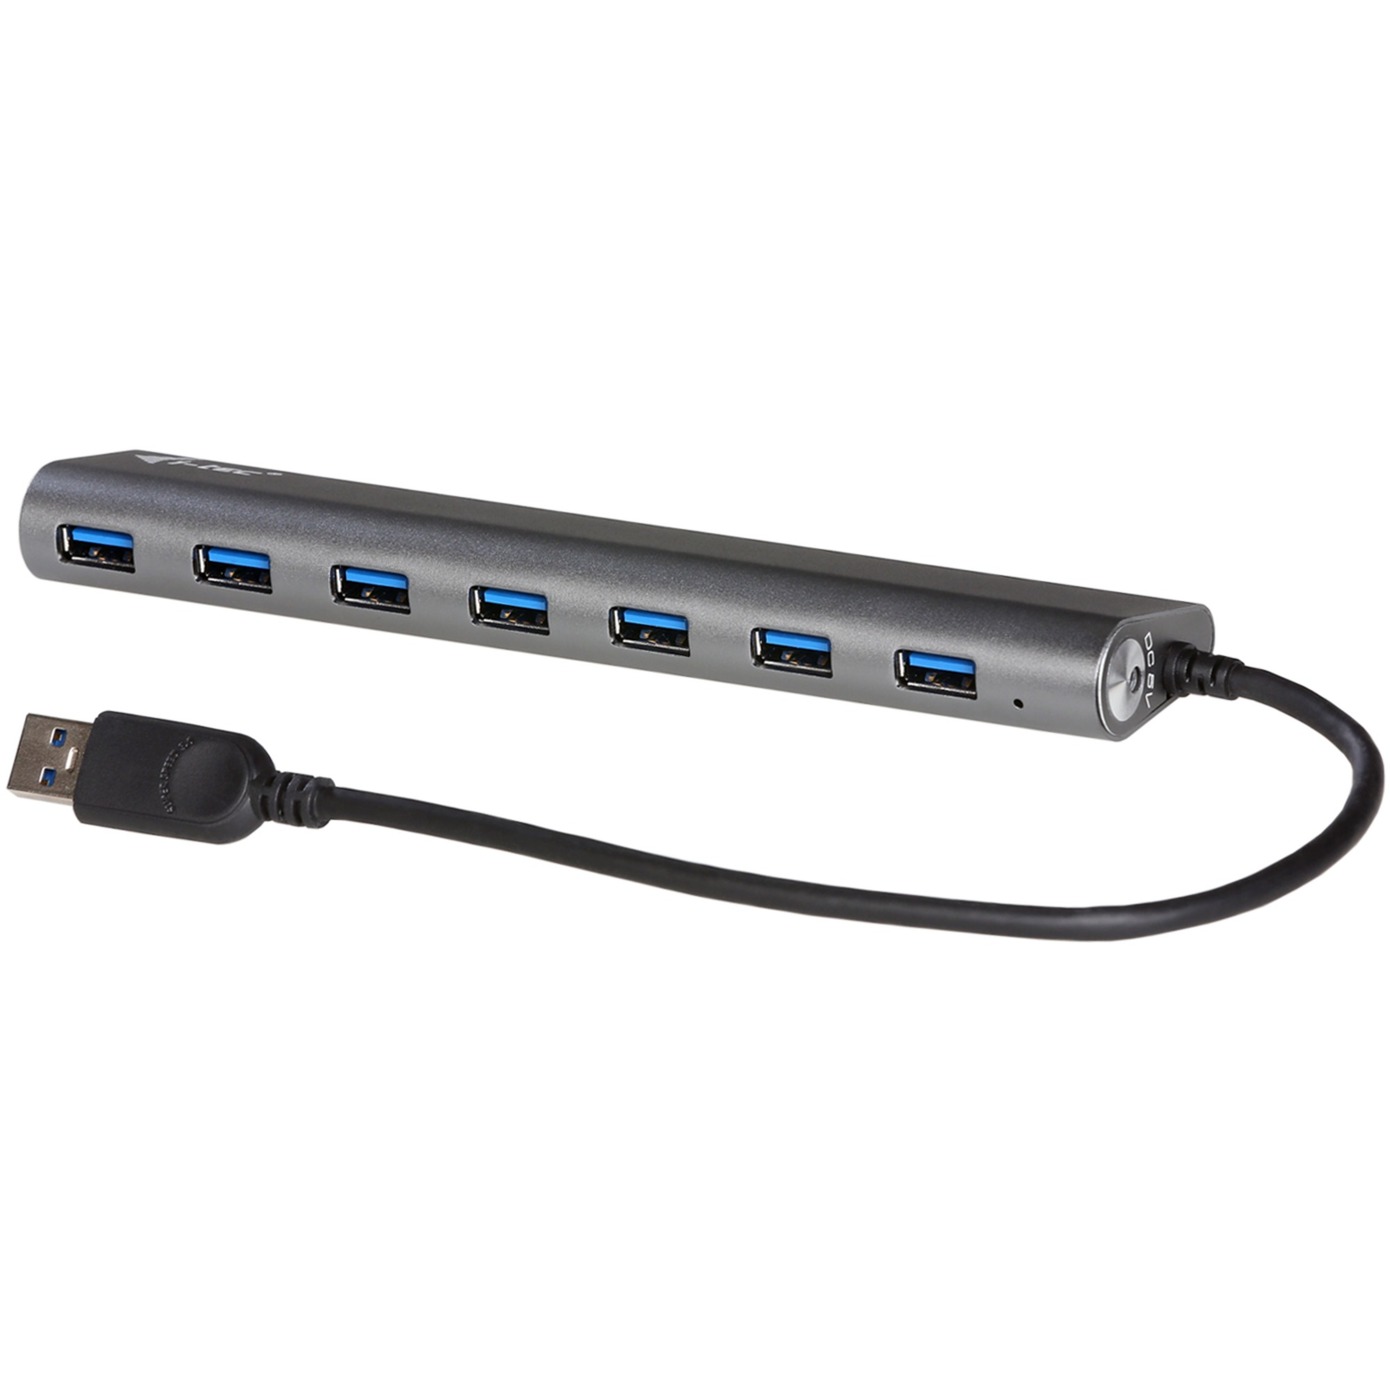 Image of Alternate - USB 3.0 Metal Charging HUB 7 Port, USB-Hub online einkaufen bei Alternate